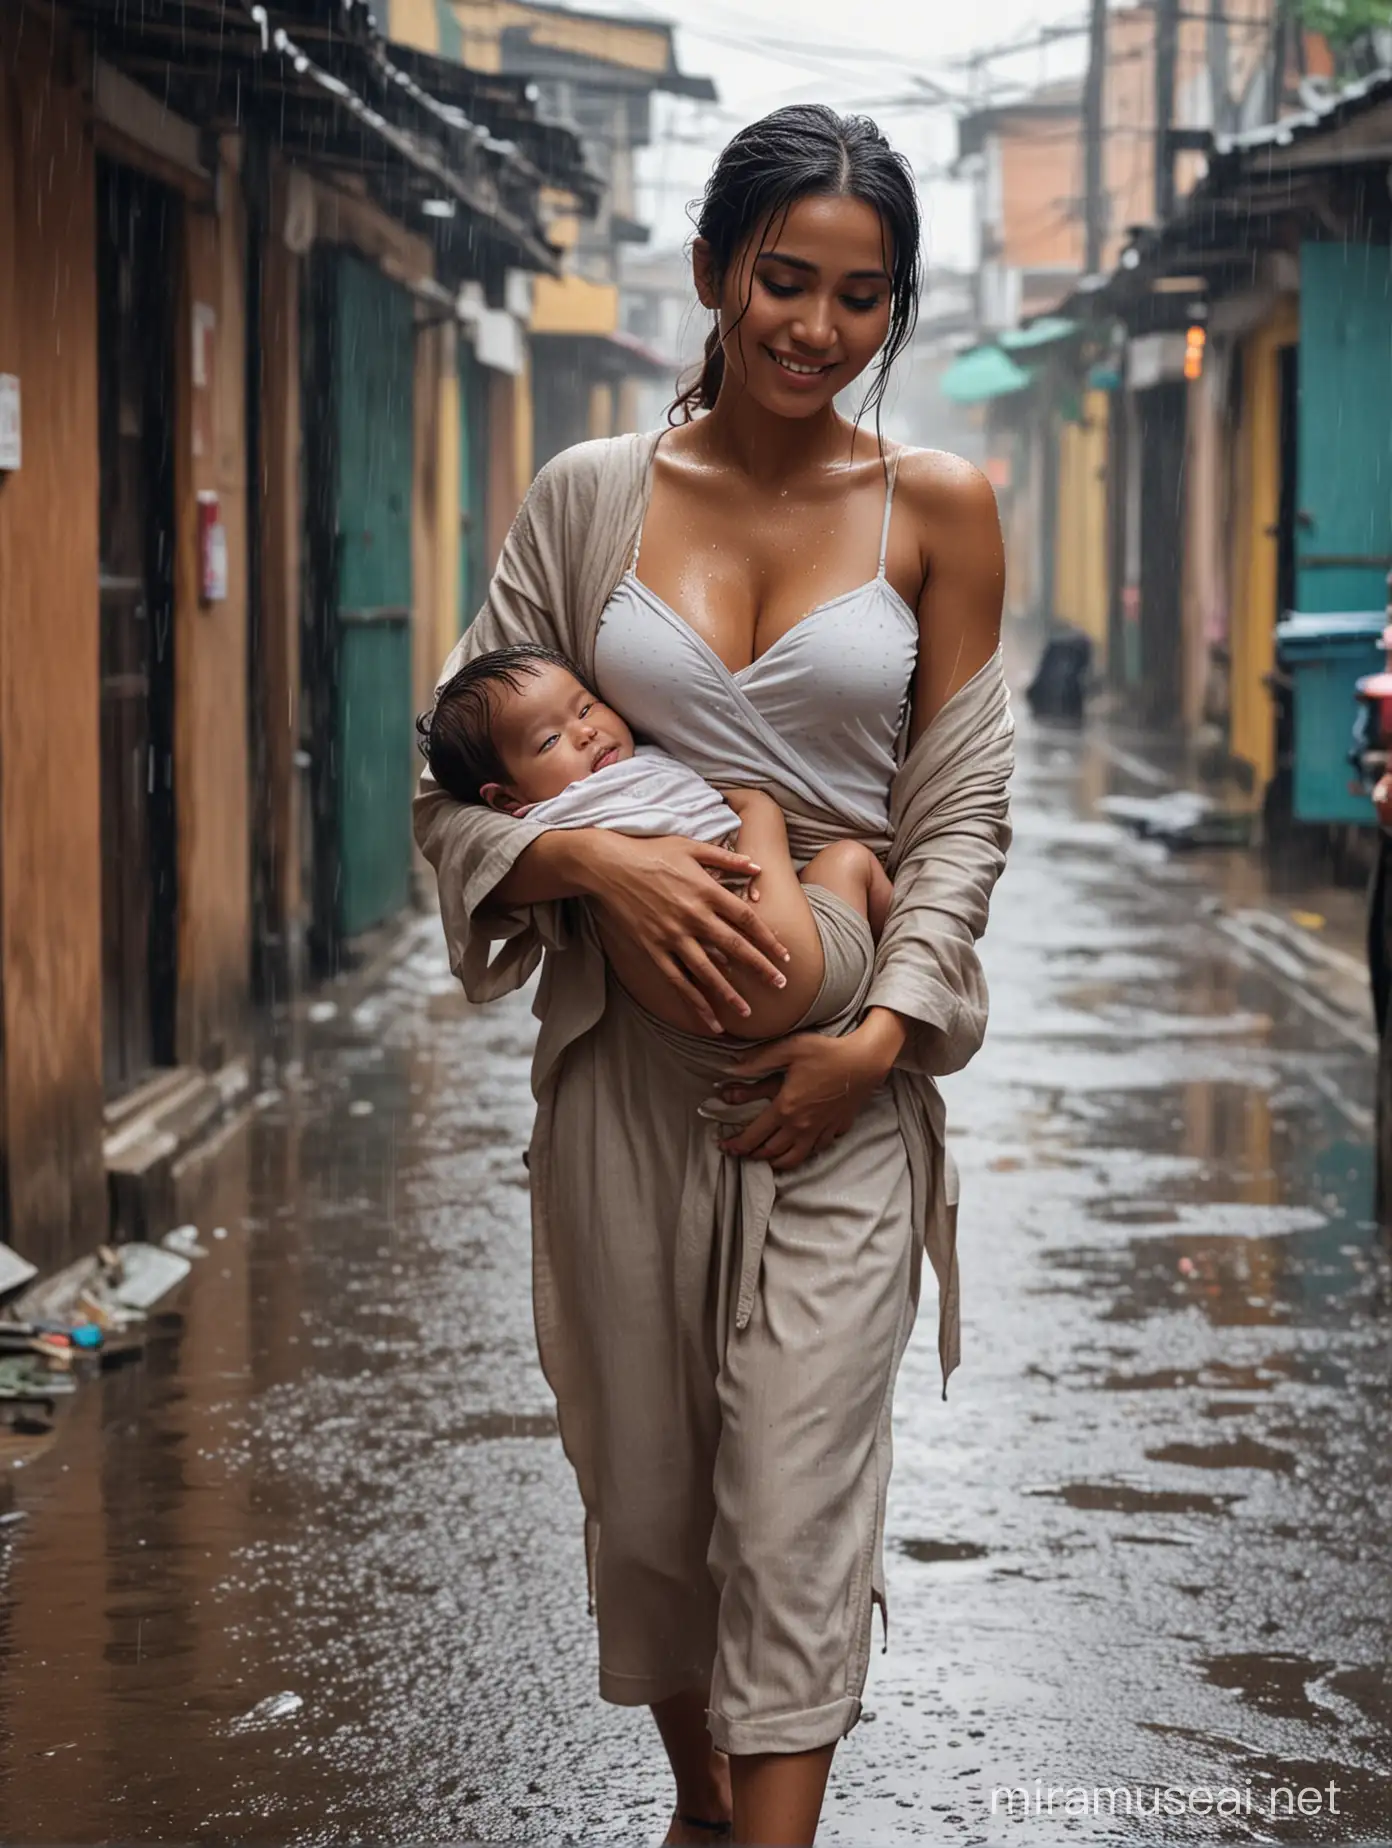 Surabaya Mother and Child in Rainy Alley Conversation